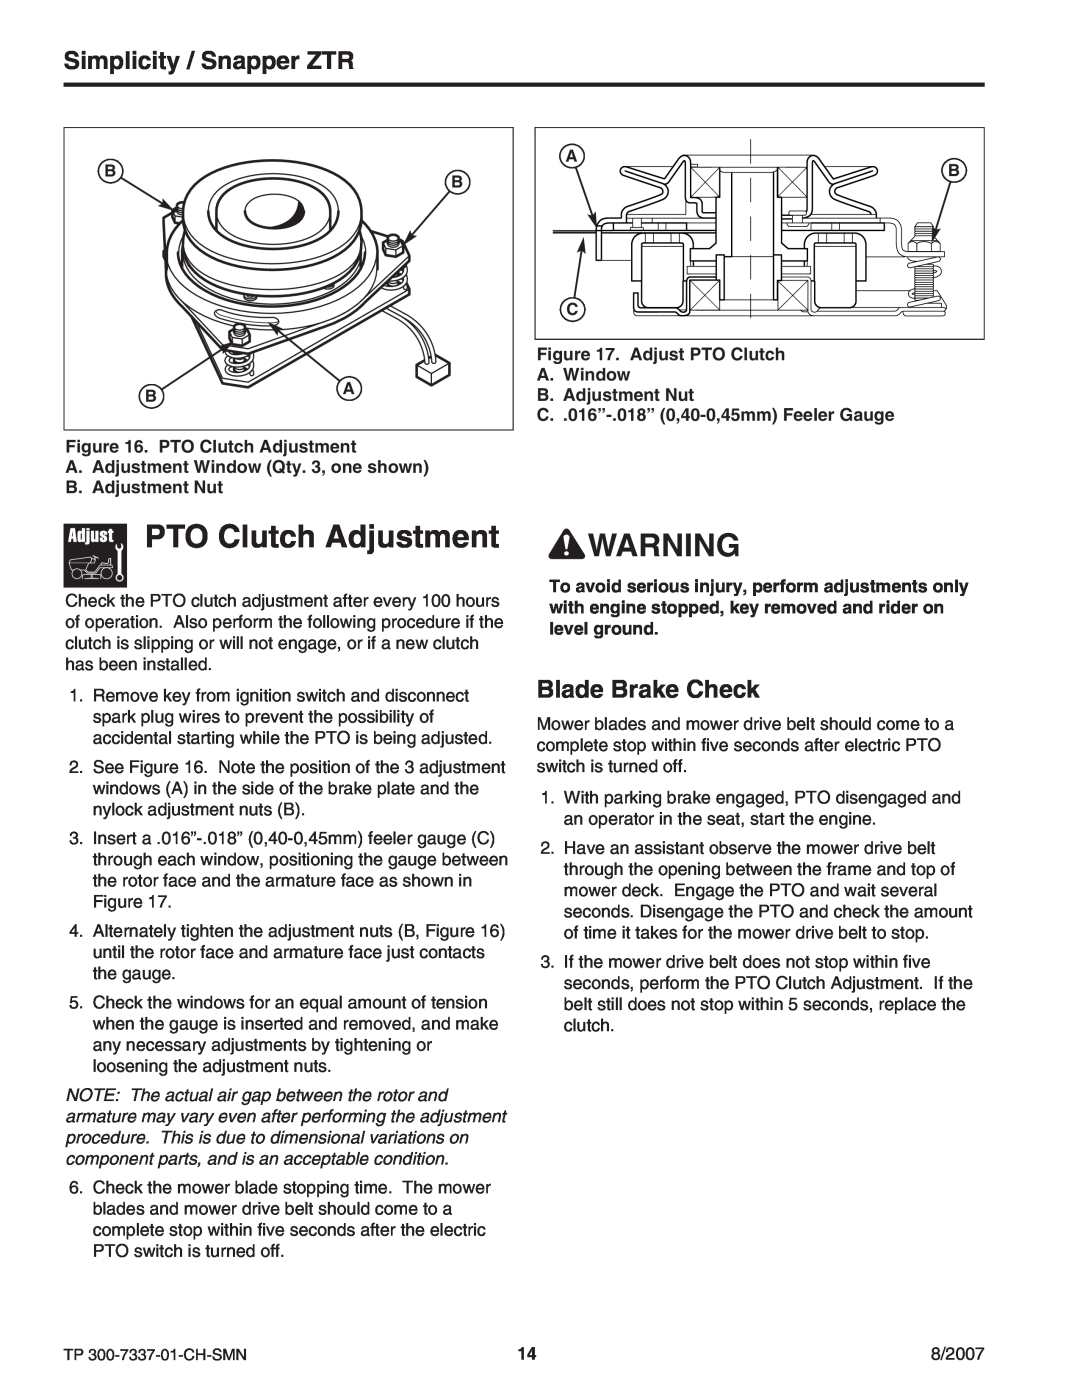 Snapper ZT3000 manual PTO Clutch Adjustment, Blade Brake Check, Simplicity / Snapper ZTR 